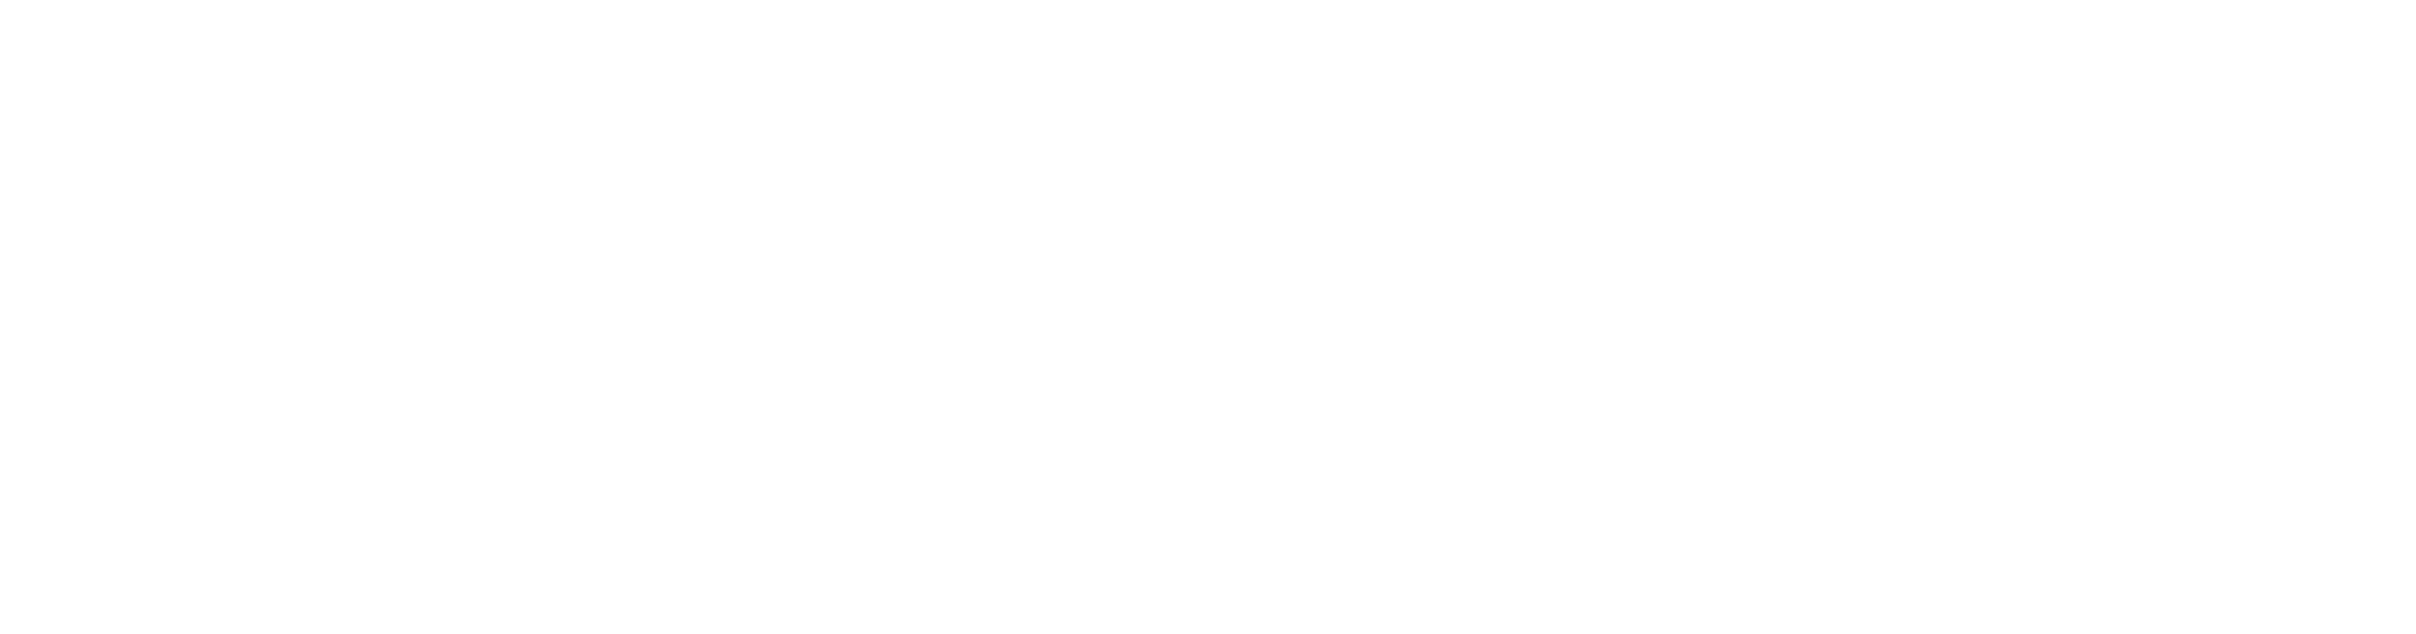 Marmon logo image